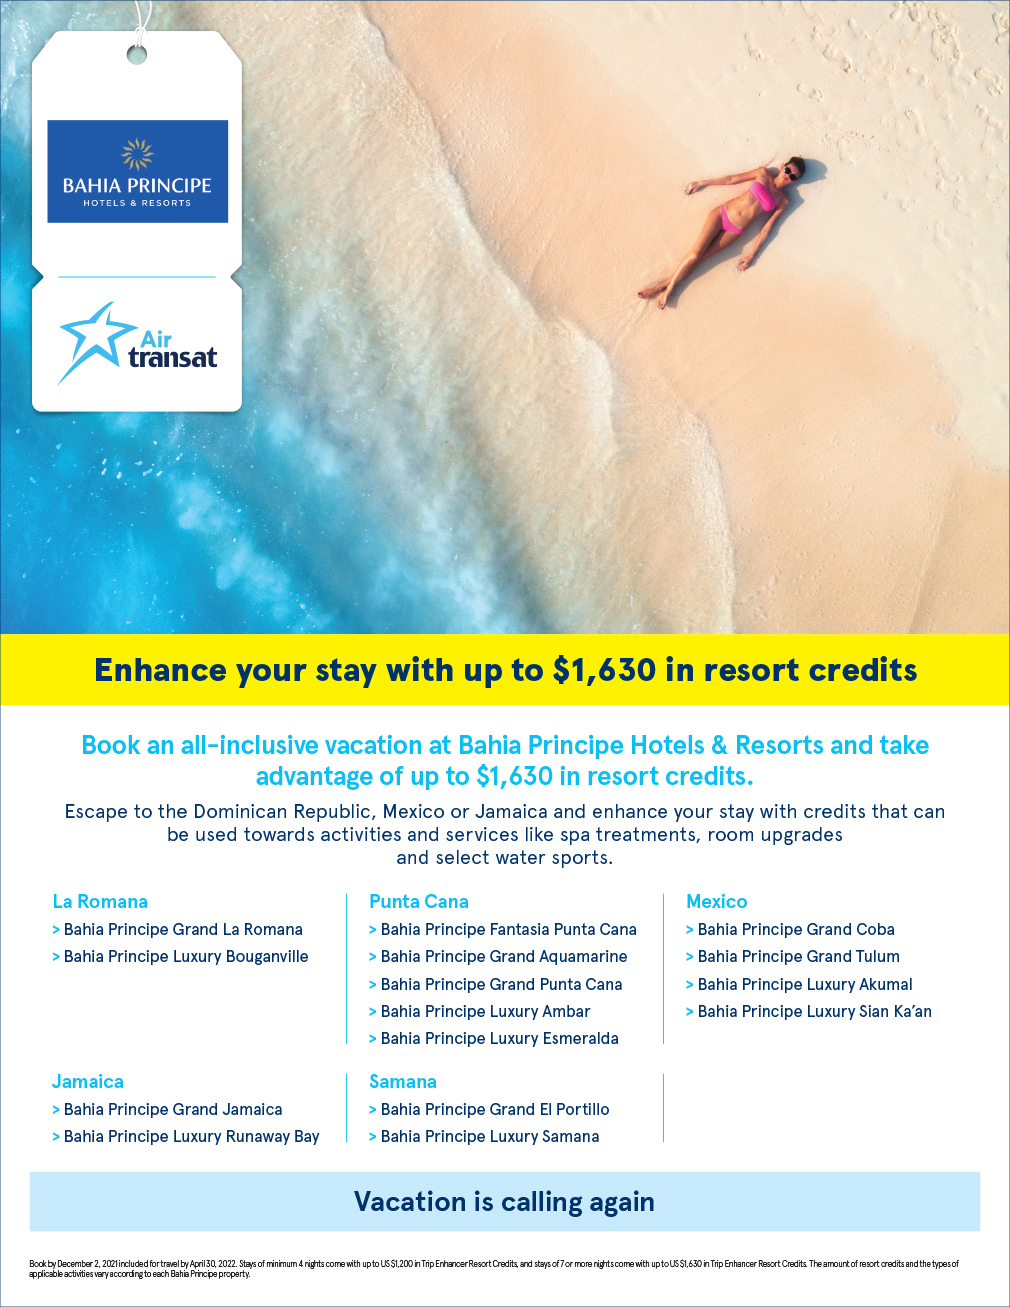 Resort Credits With Bahia Principe Hotels & Resorts